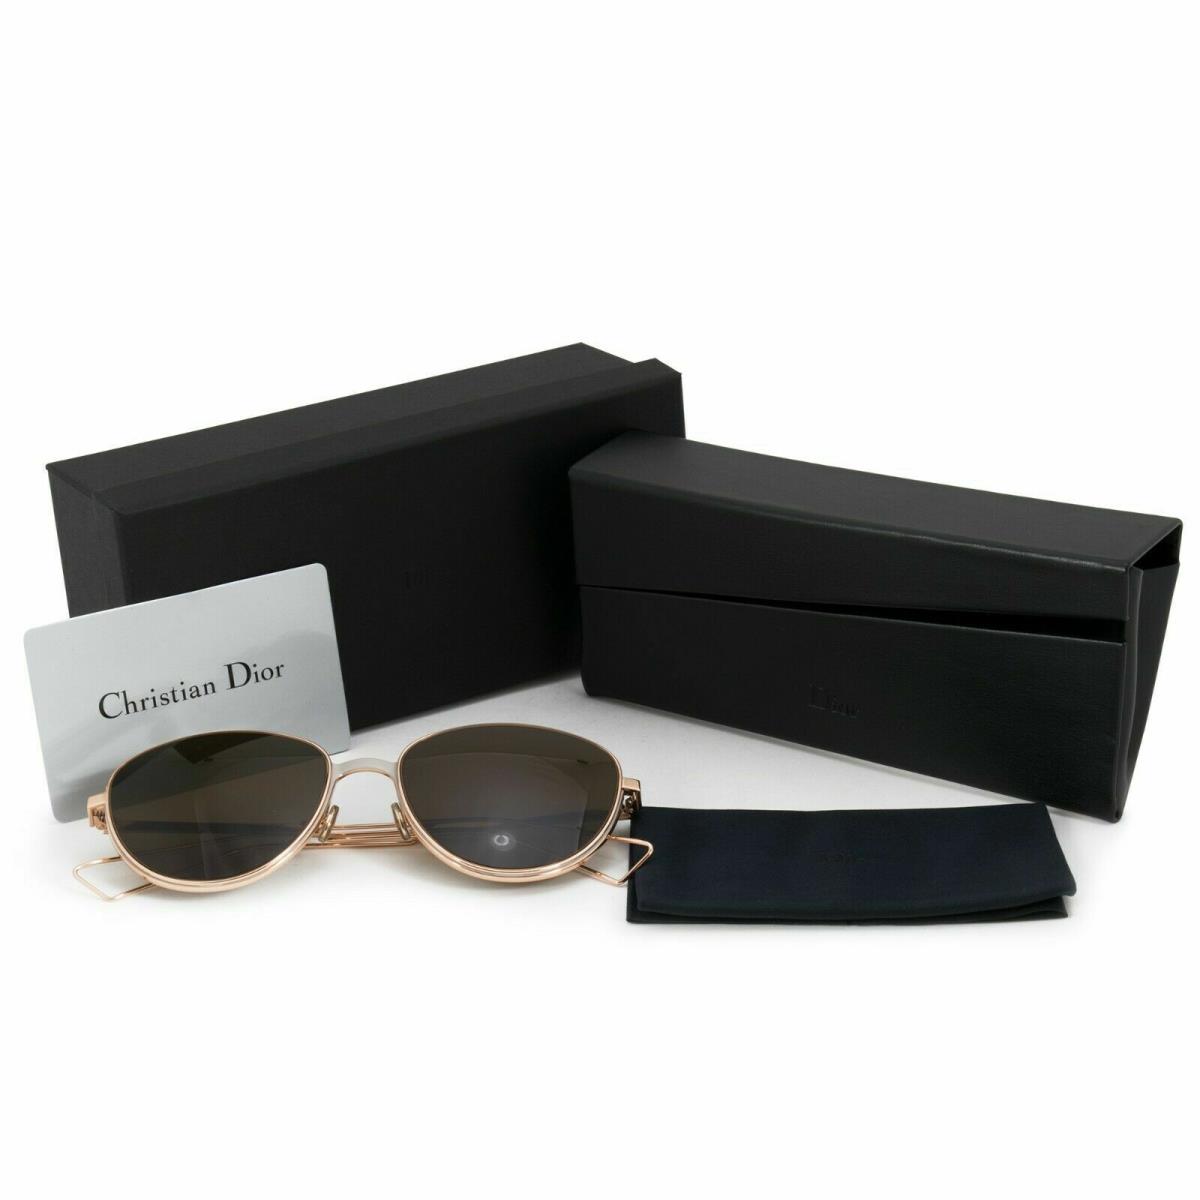 Dior sunglasses ULTRASRCXEC - Gray , Gold/ Matte Gray Frame, Brown Lens 2